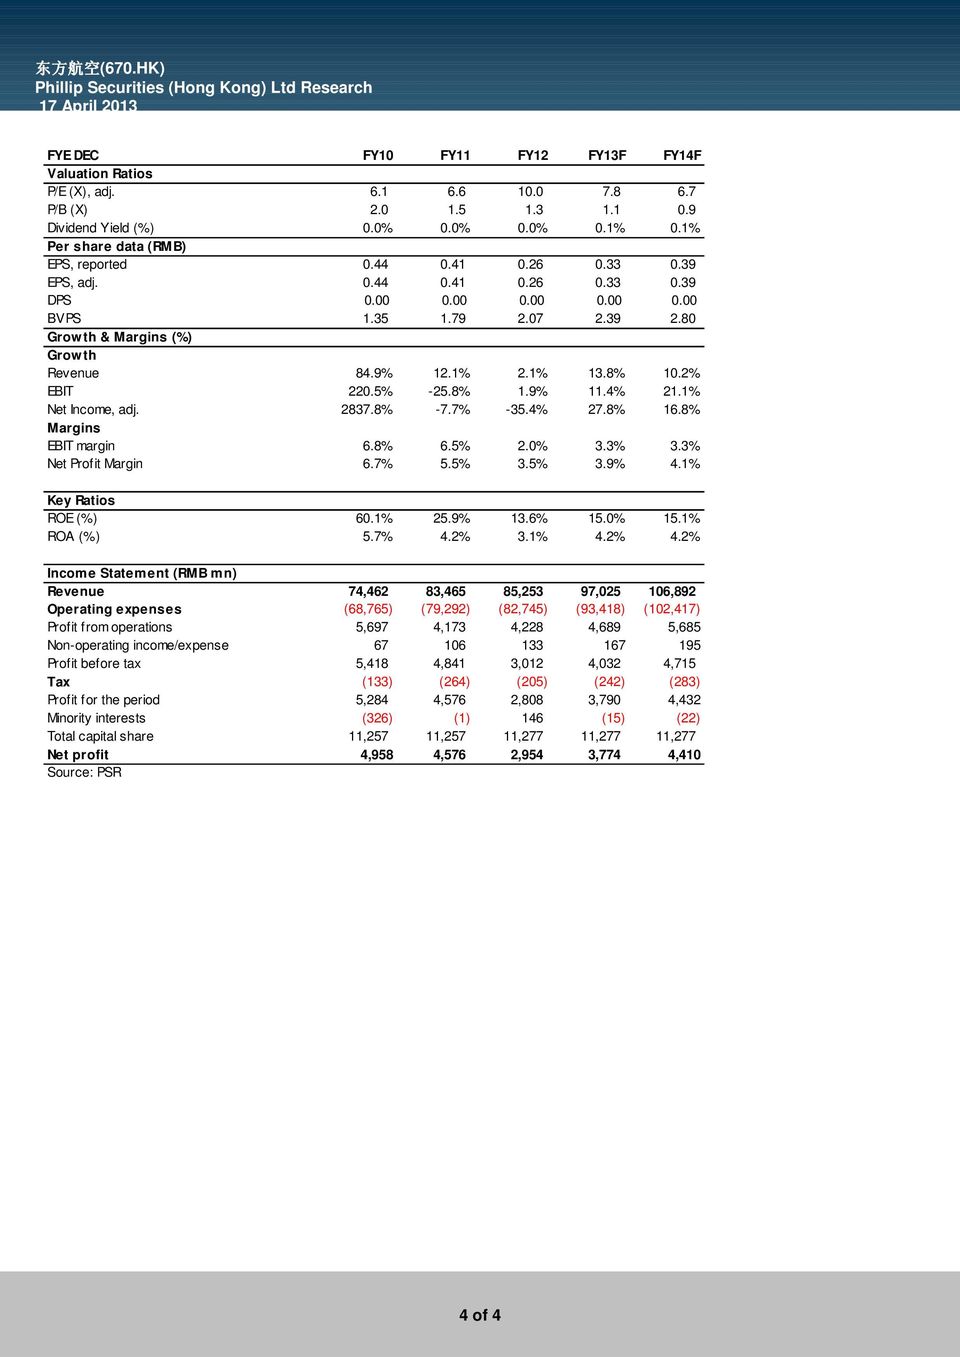 8% 1.9% 11.4% 21.1% Net Income, adj. 2837.8% -7.7% -35.4% 27.8% 16.8% Margins EBIT margin 6.8% 6.5% 2.0% 3.3% 3.3% Net Profit Margin 6.7% 5.5% 3.5% 3.9% 4.1% Key Ratios ROE (%) 60.1% 25.9% 13.6% 15.